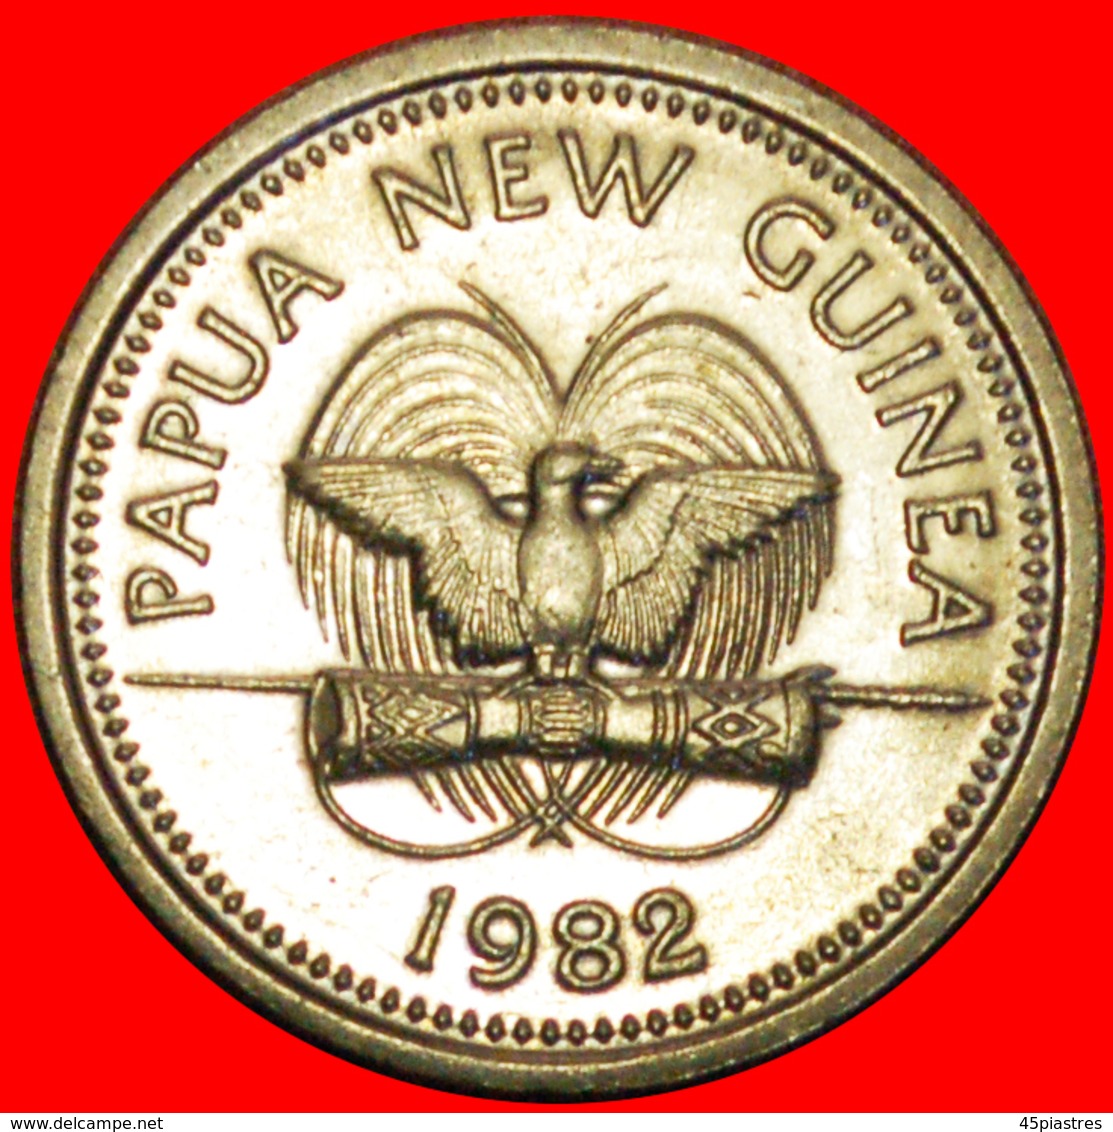 + GREAT BRITAIN TURTLE: PAPUA NEW GUINEA ★ 5 TOEA 1982 MINT LUSTER! LOW START ★ NO RESERVE! - Papua New Guinea